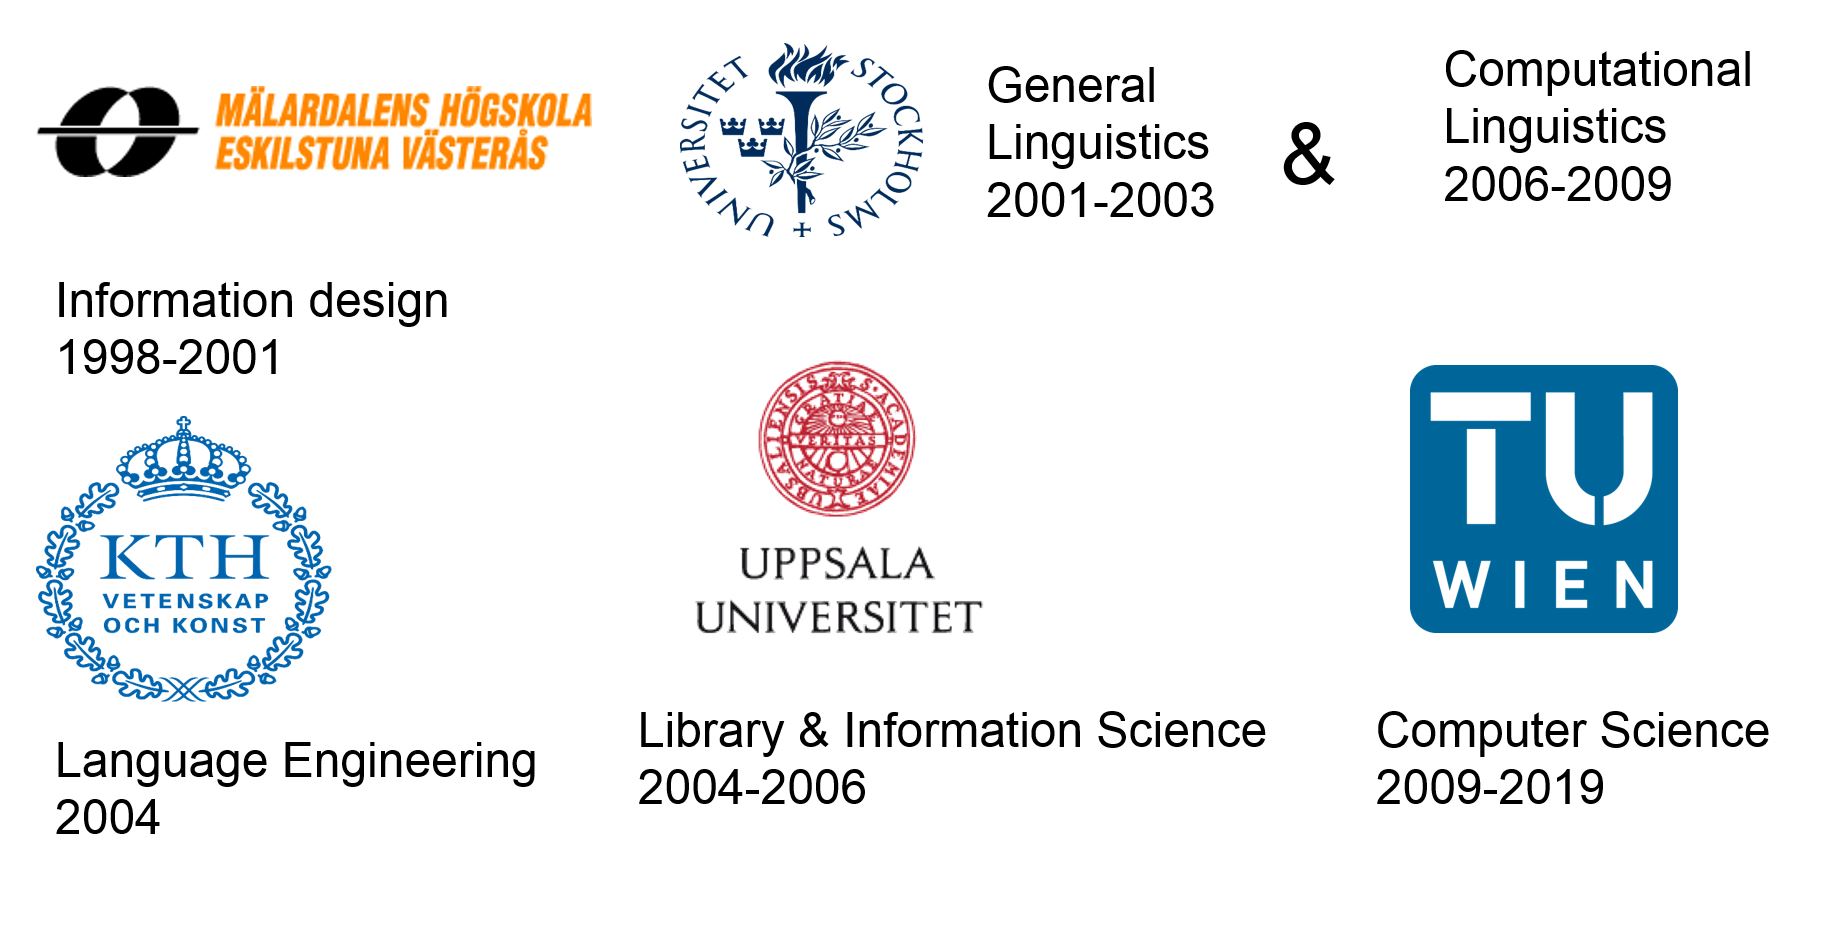 Education Logos